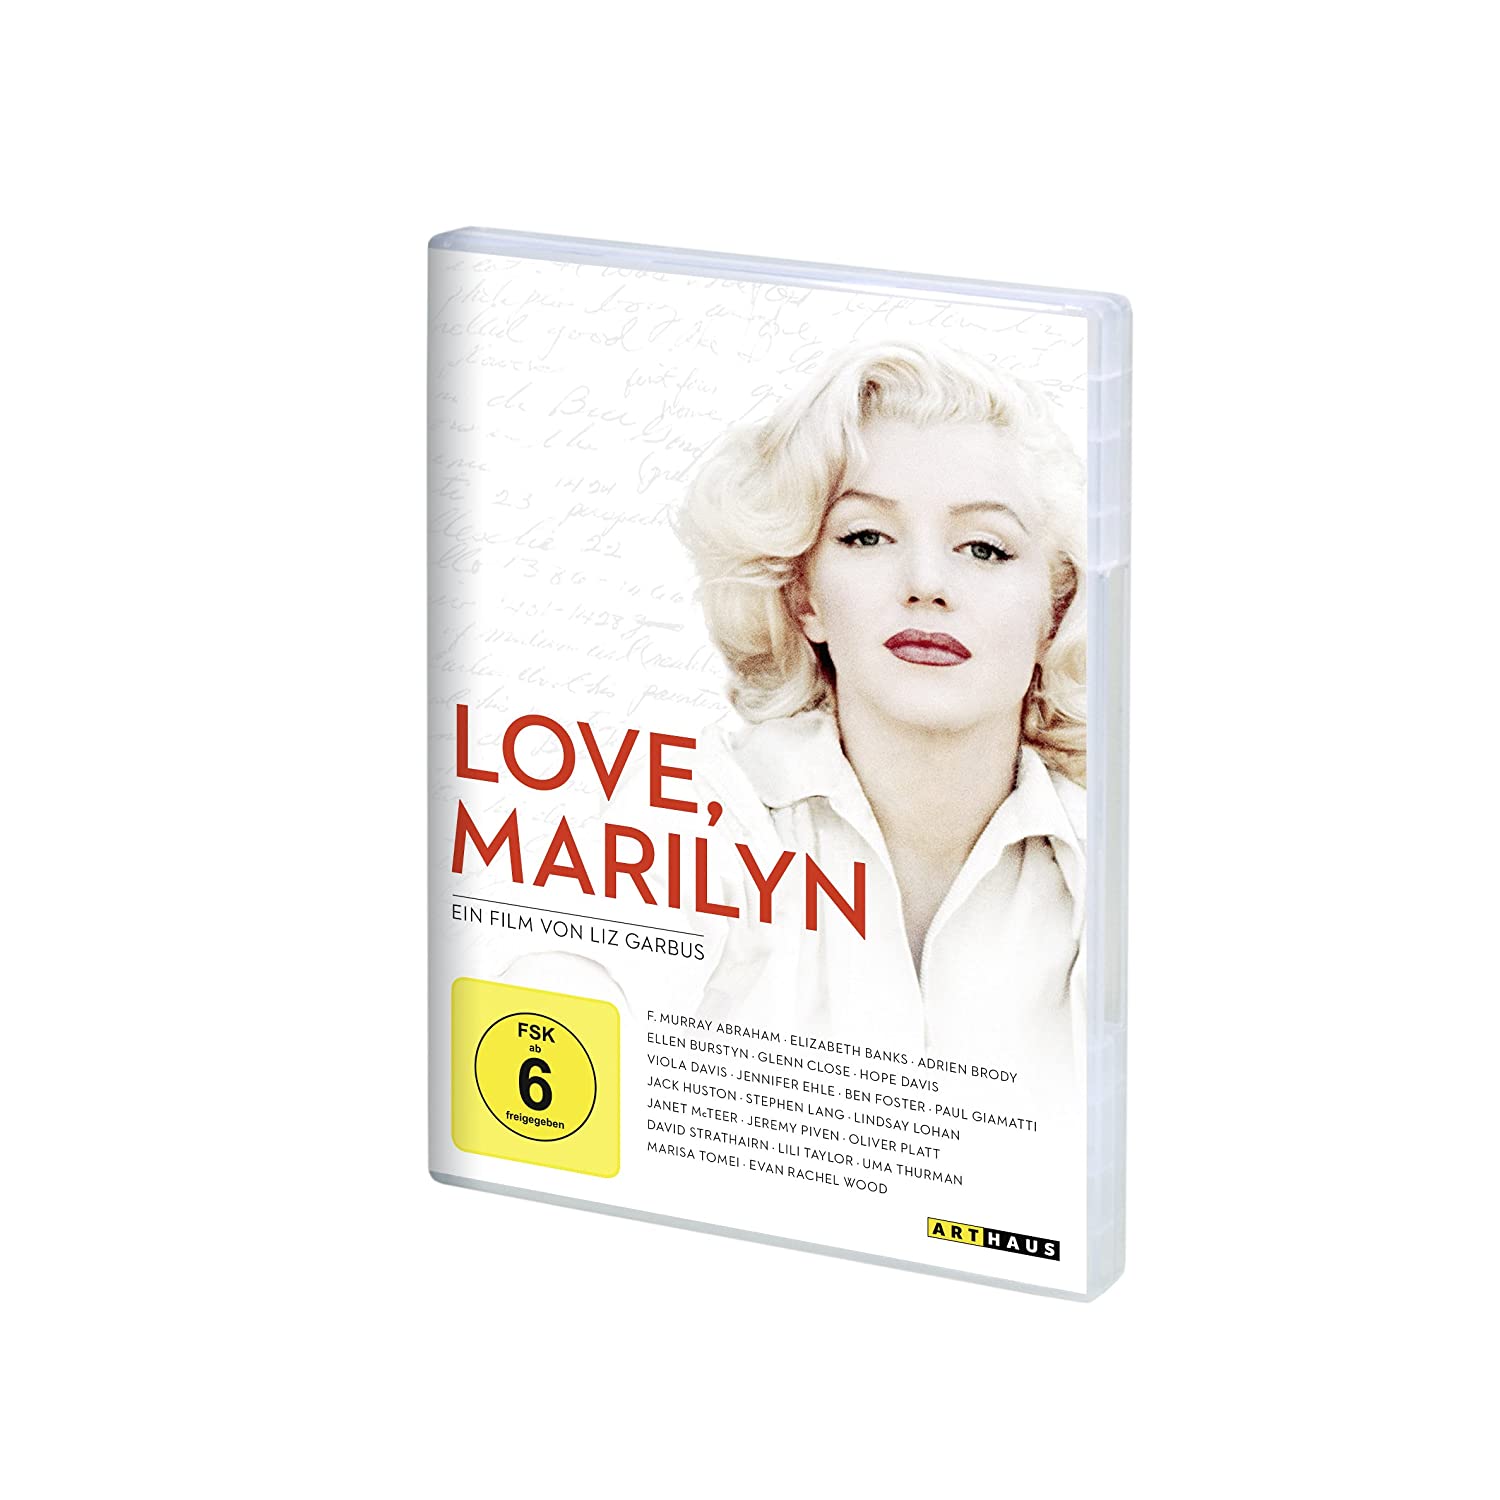 Love, Marilyn - Liz Garbus